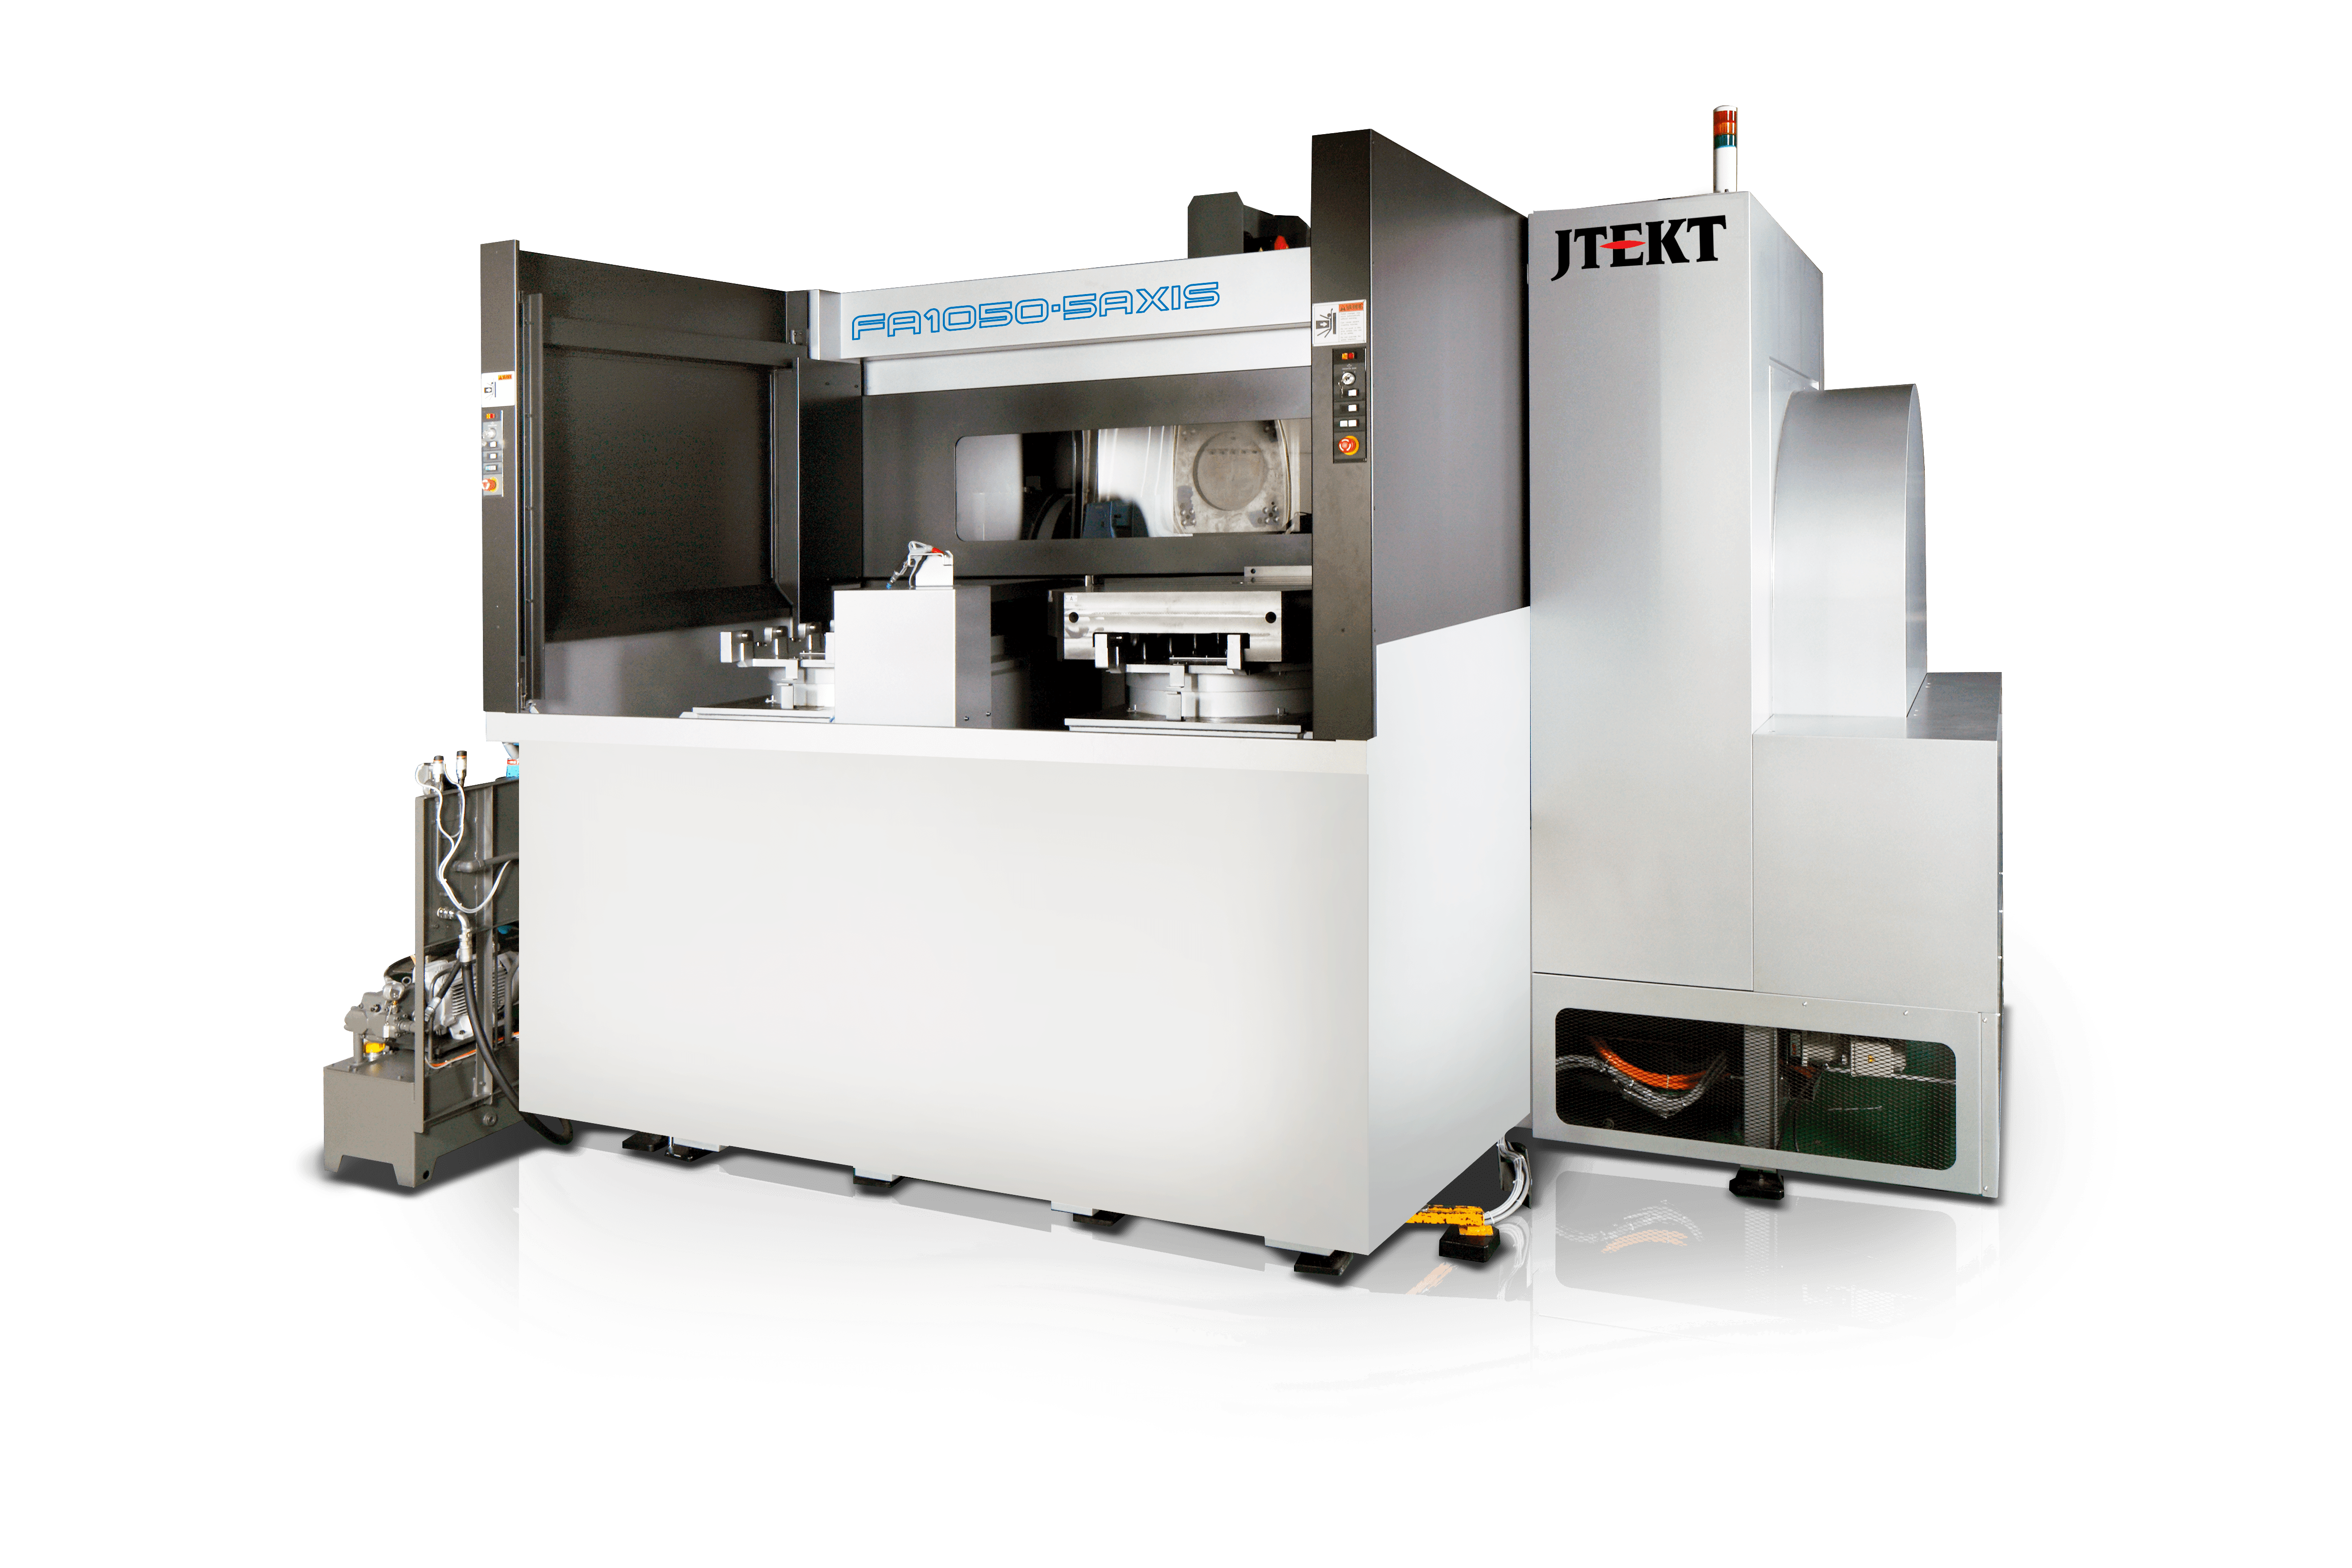 JTEKT Machinery North America | FA1050S-5Axis